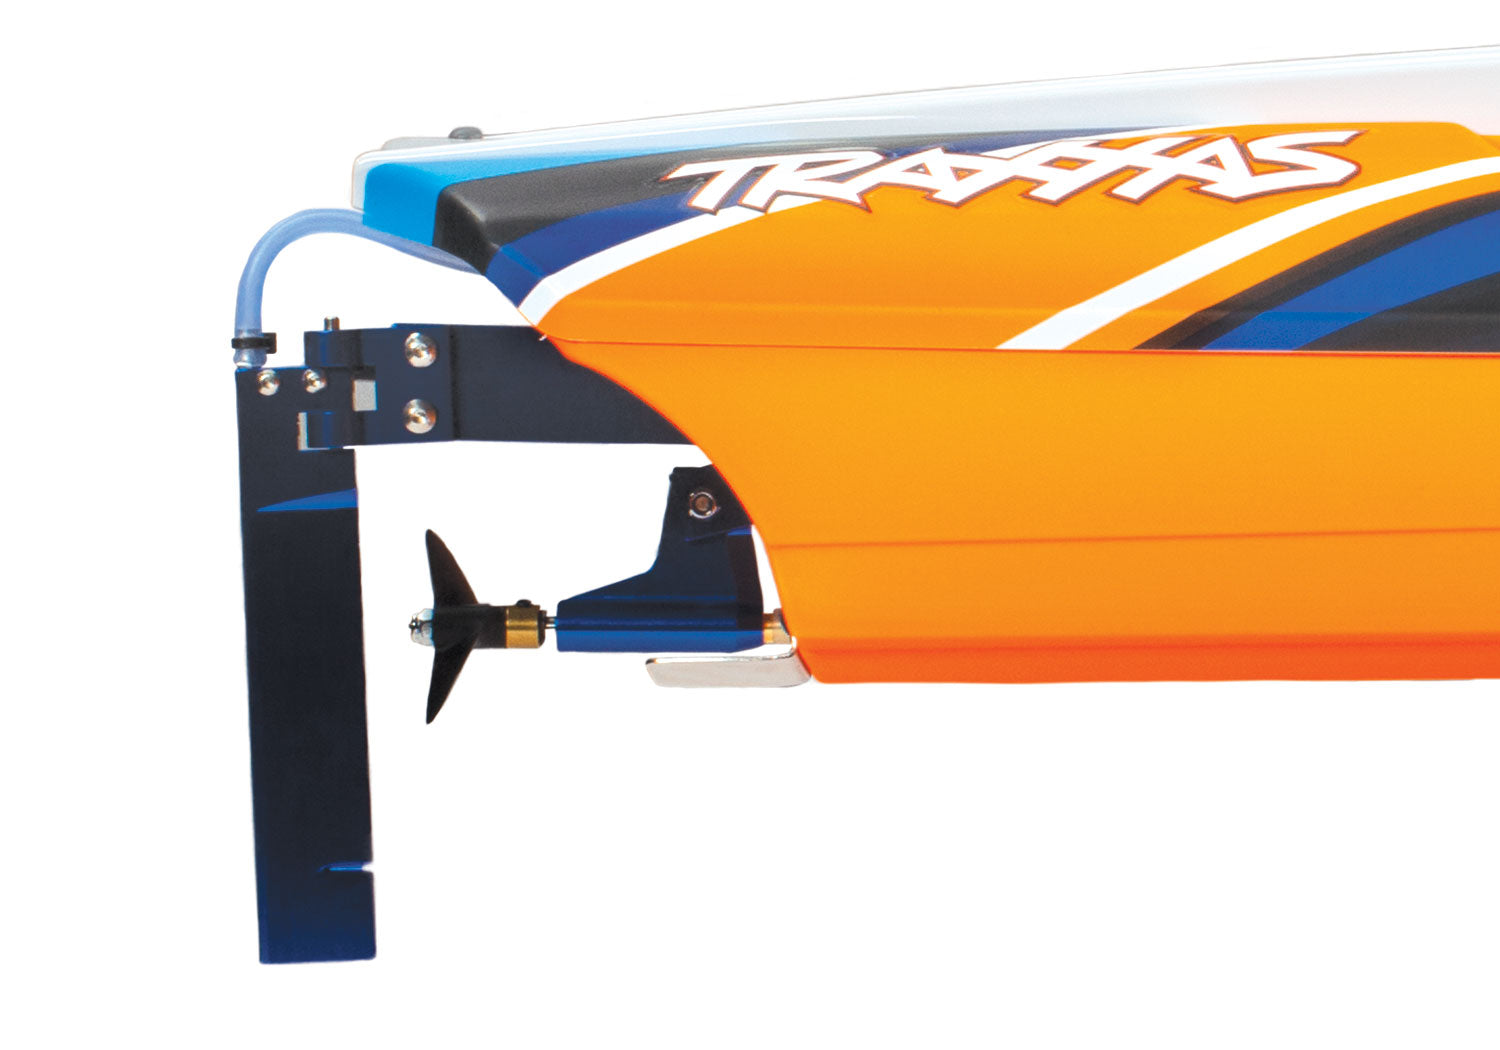 Traxxas M41 Race Boat Brushless 40" Orange 57046-4